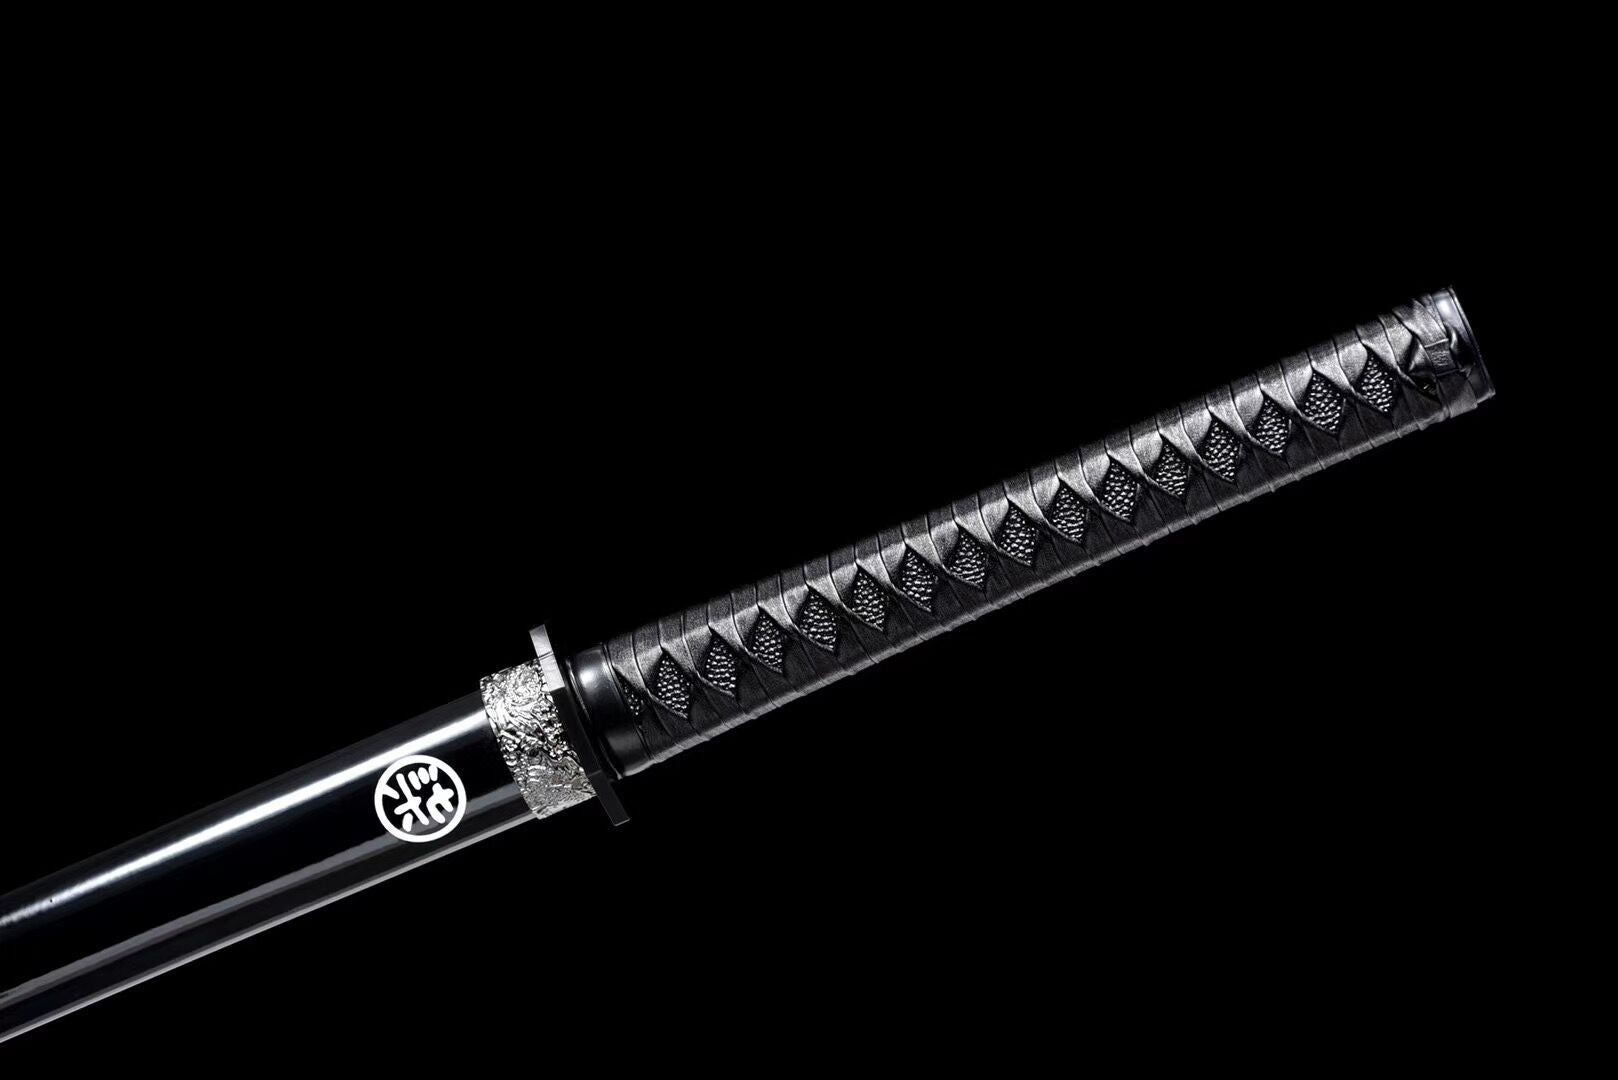 Magic Blade, Thousand shard demon dagger,Handmade Chinese Sword,Tang-Horizontal Sword, High-performance spring steel, Longquan sword